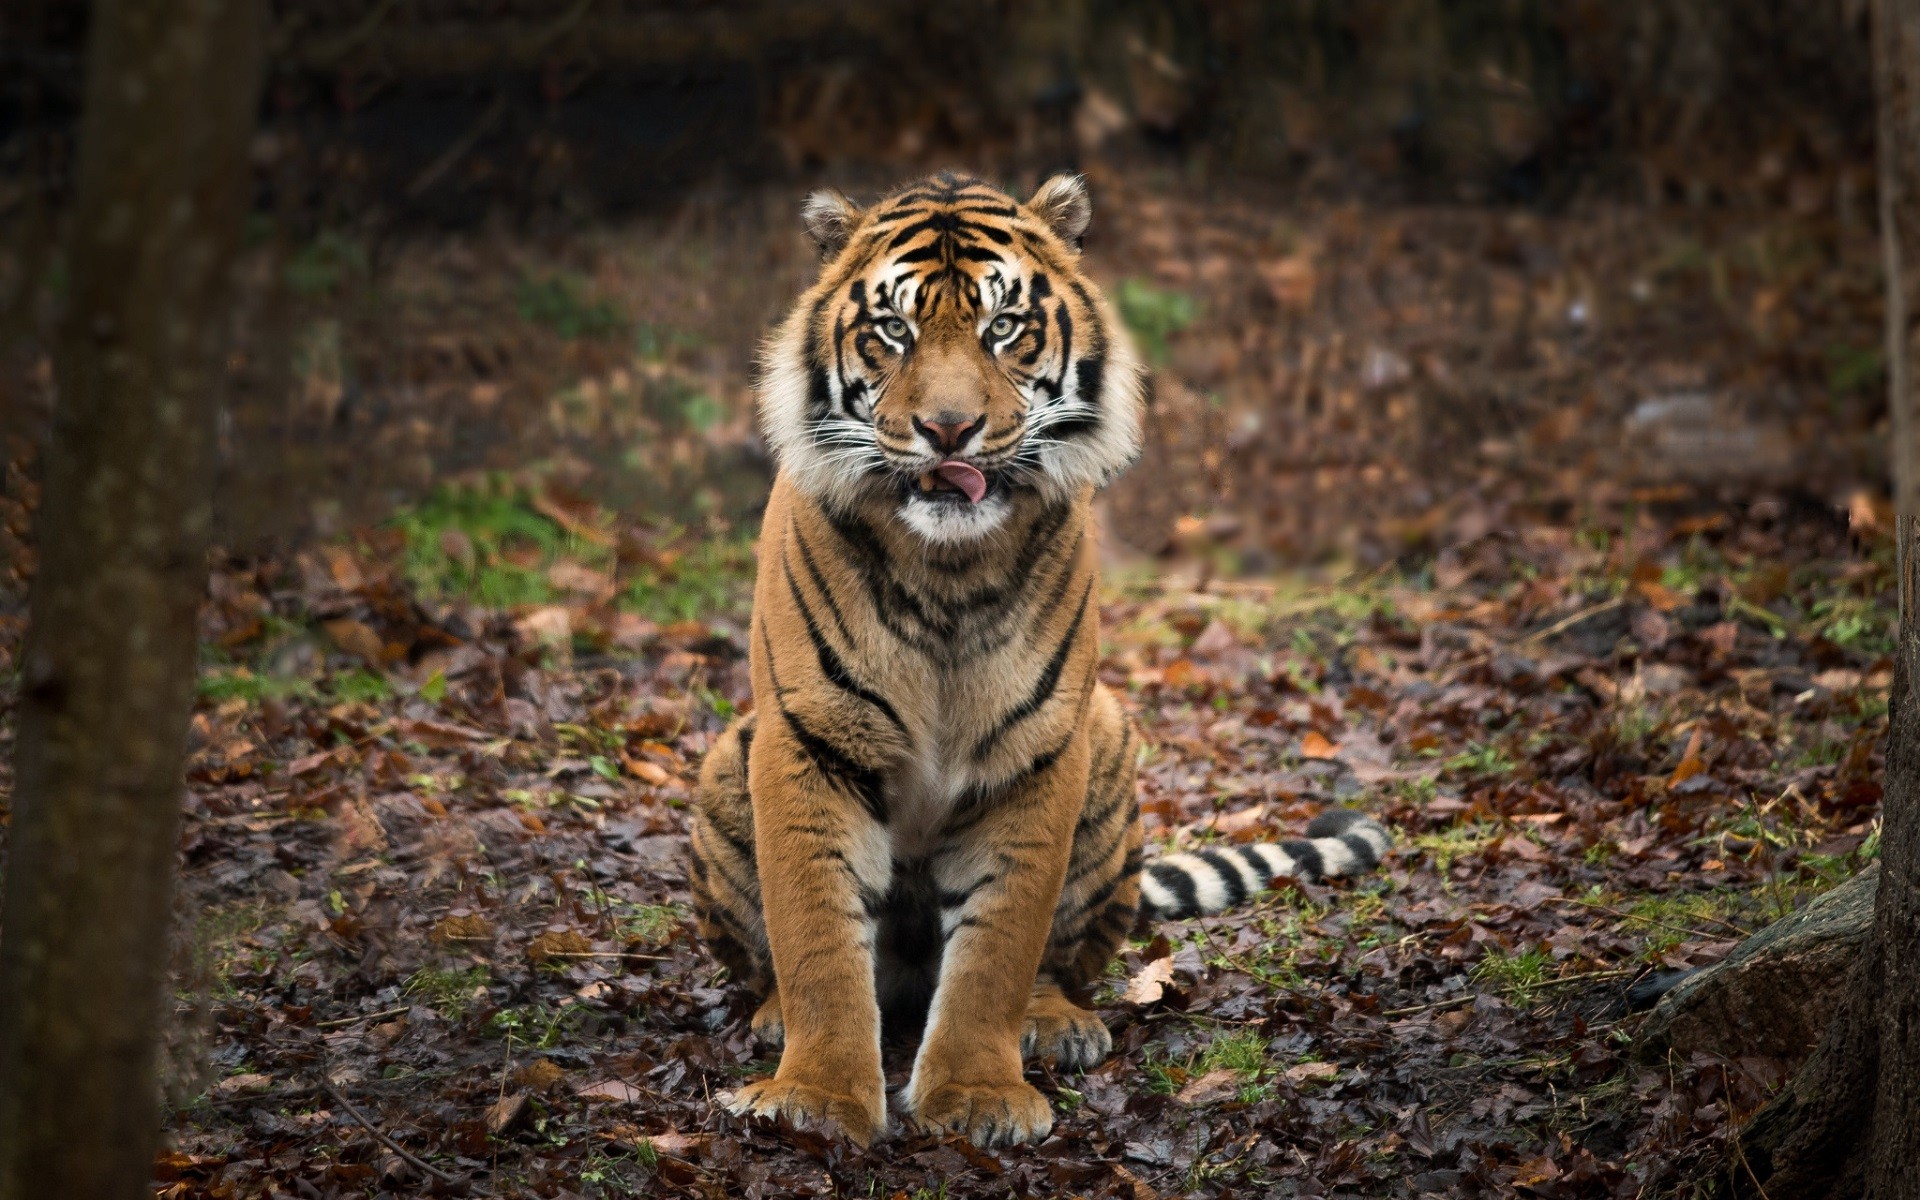 General 1920x1200 animals nature depth of field tiger big cats tongues tongue out looking at viewer mammals